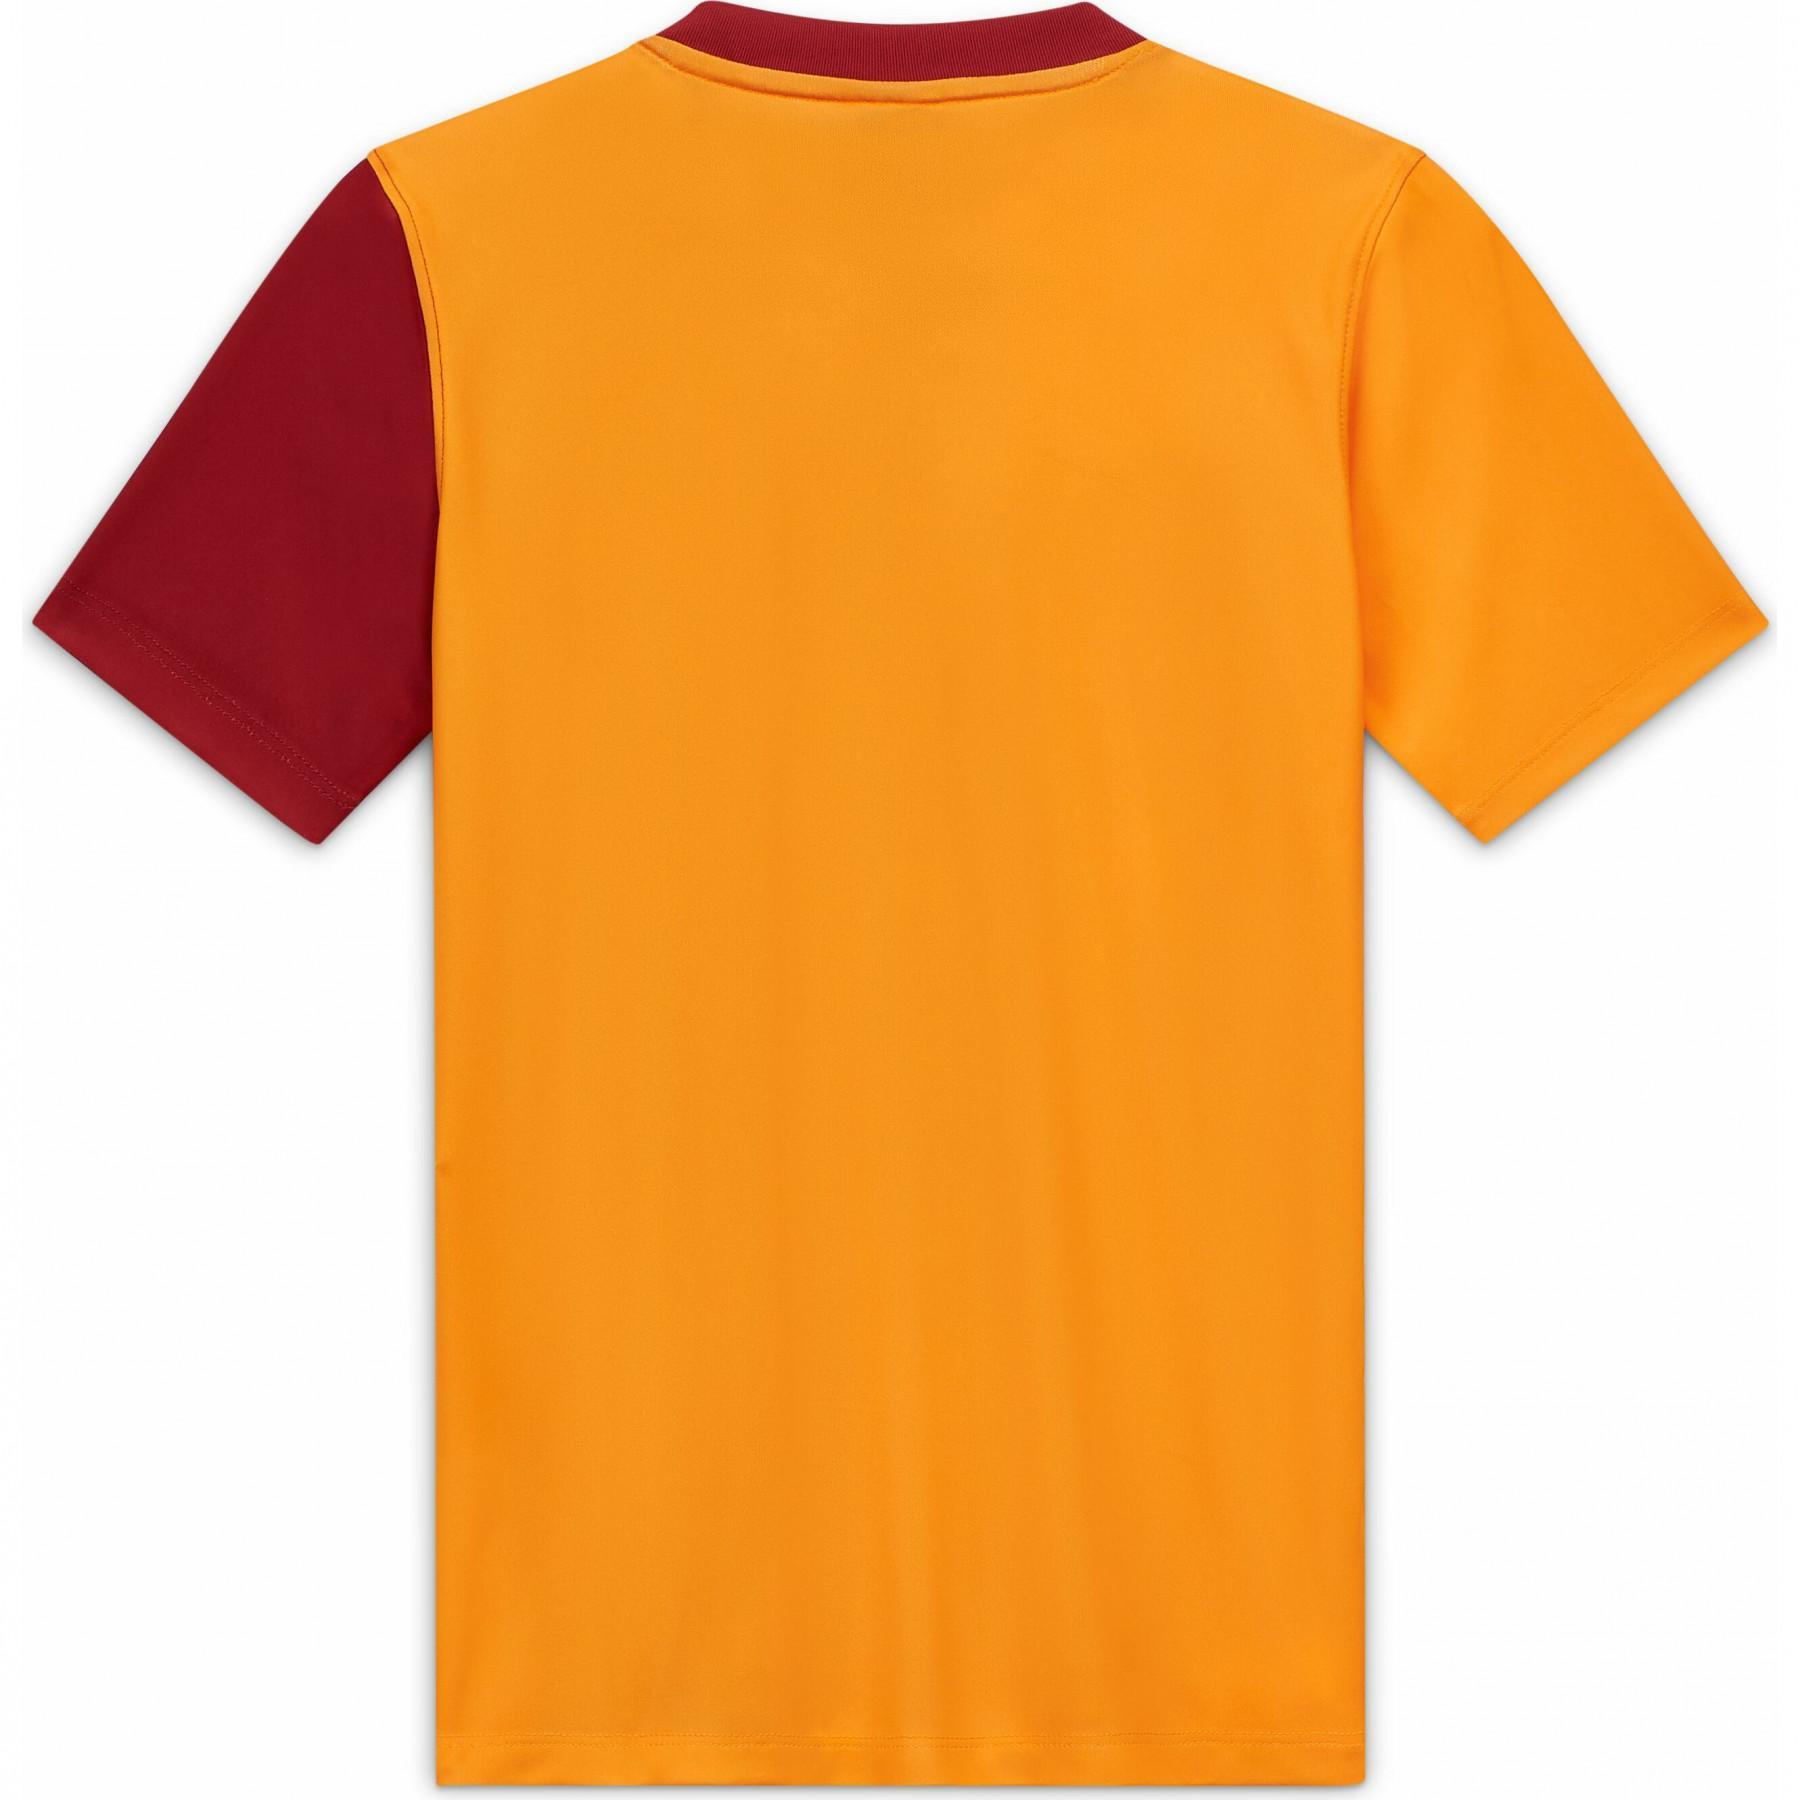 Children's jersey Galatasaray 2020/21